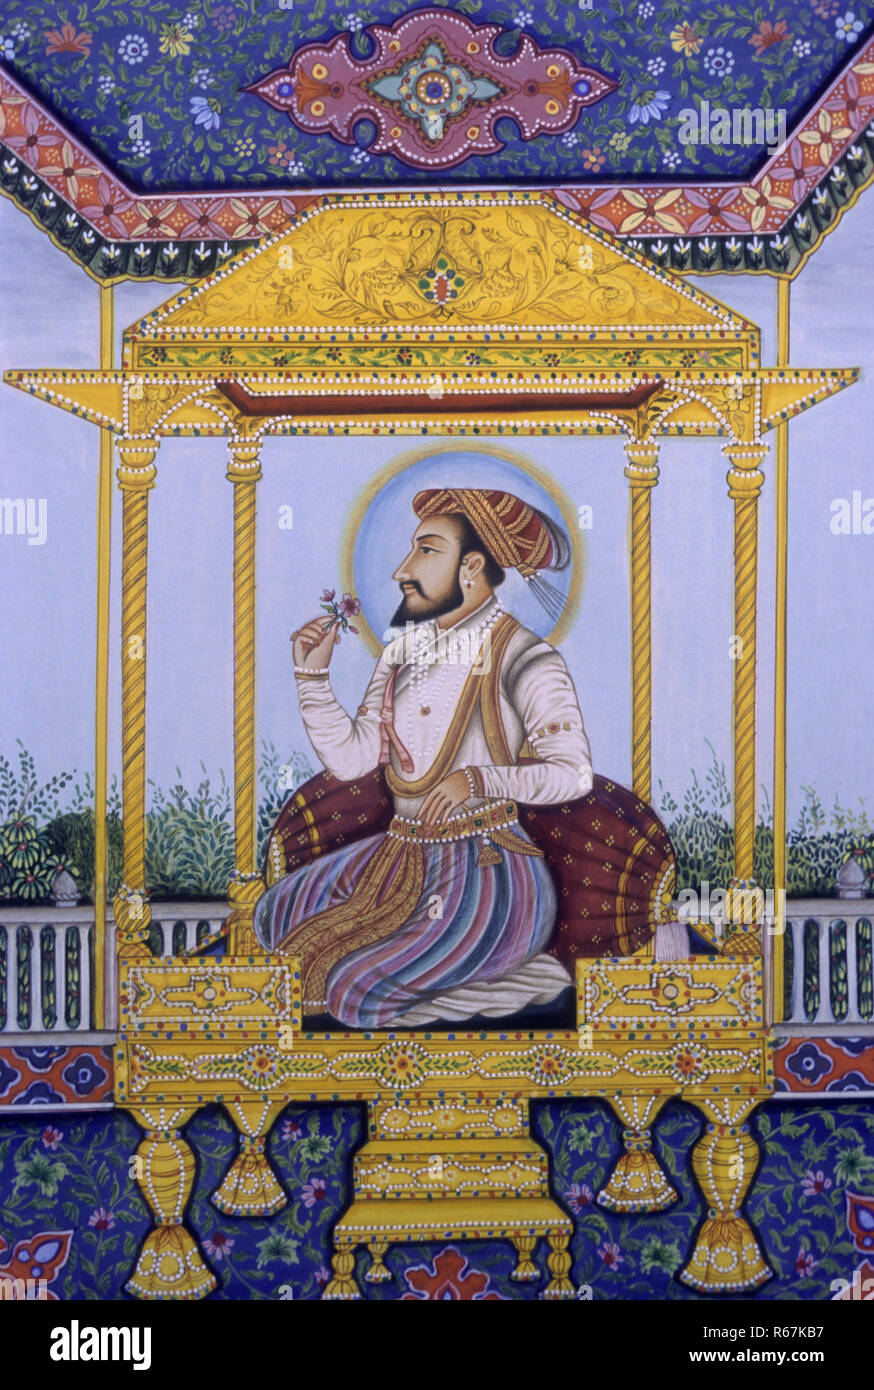 mughal emperor shah Jahan miniature painting Stock Photo